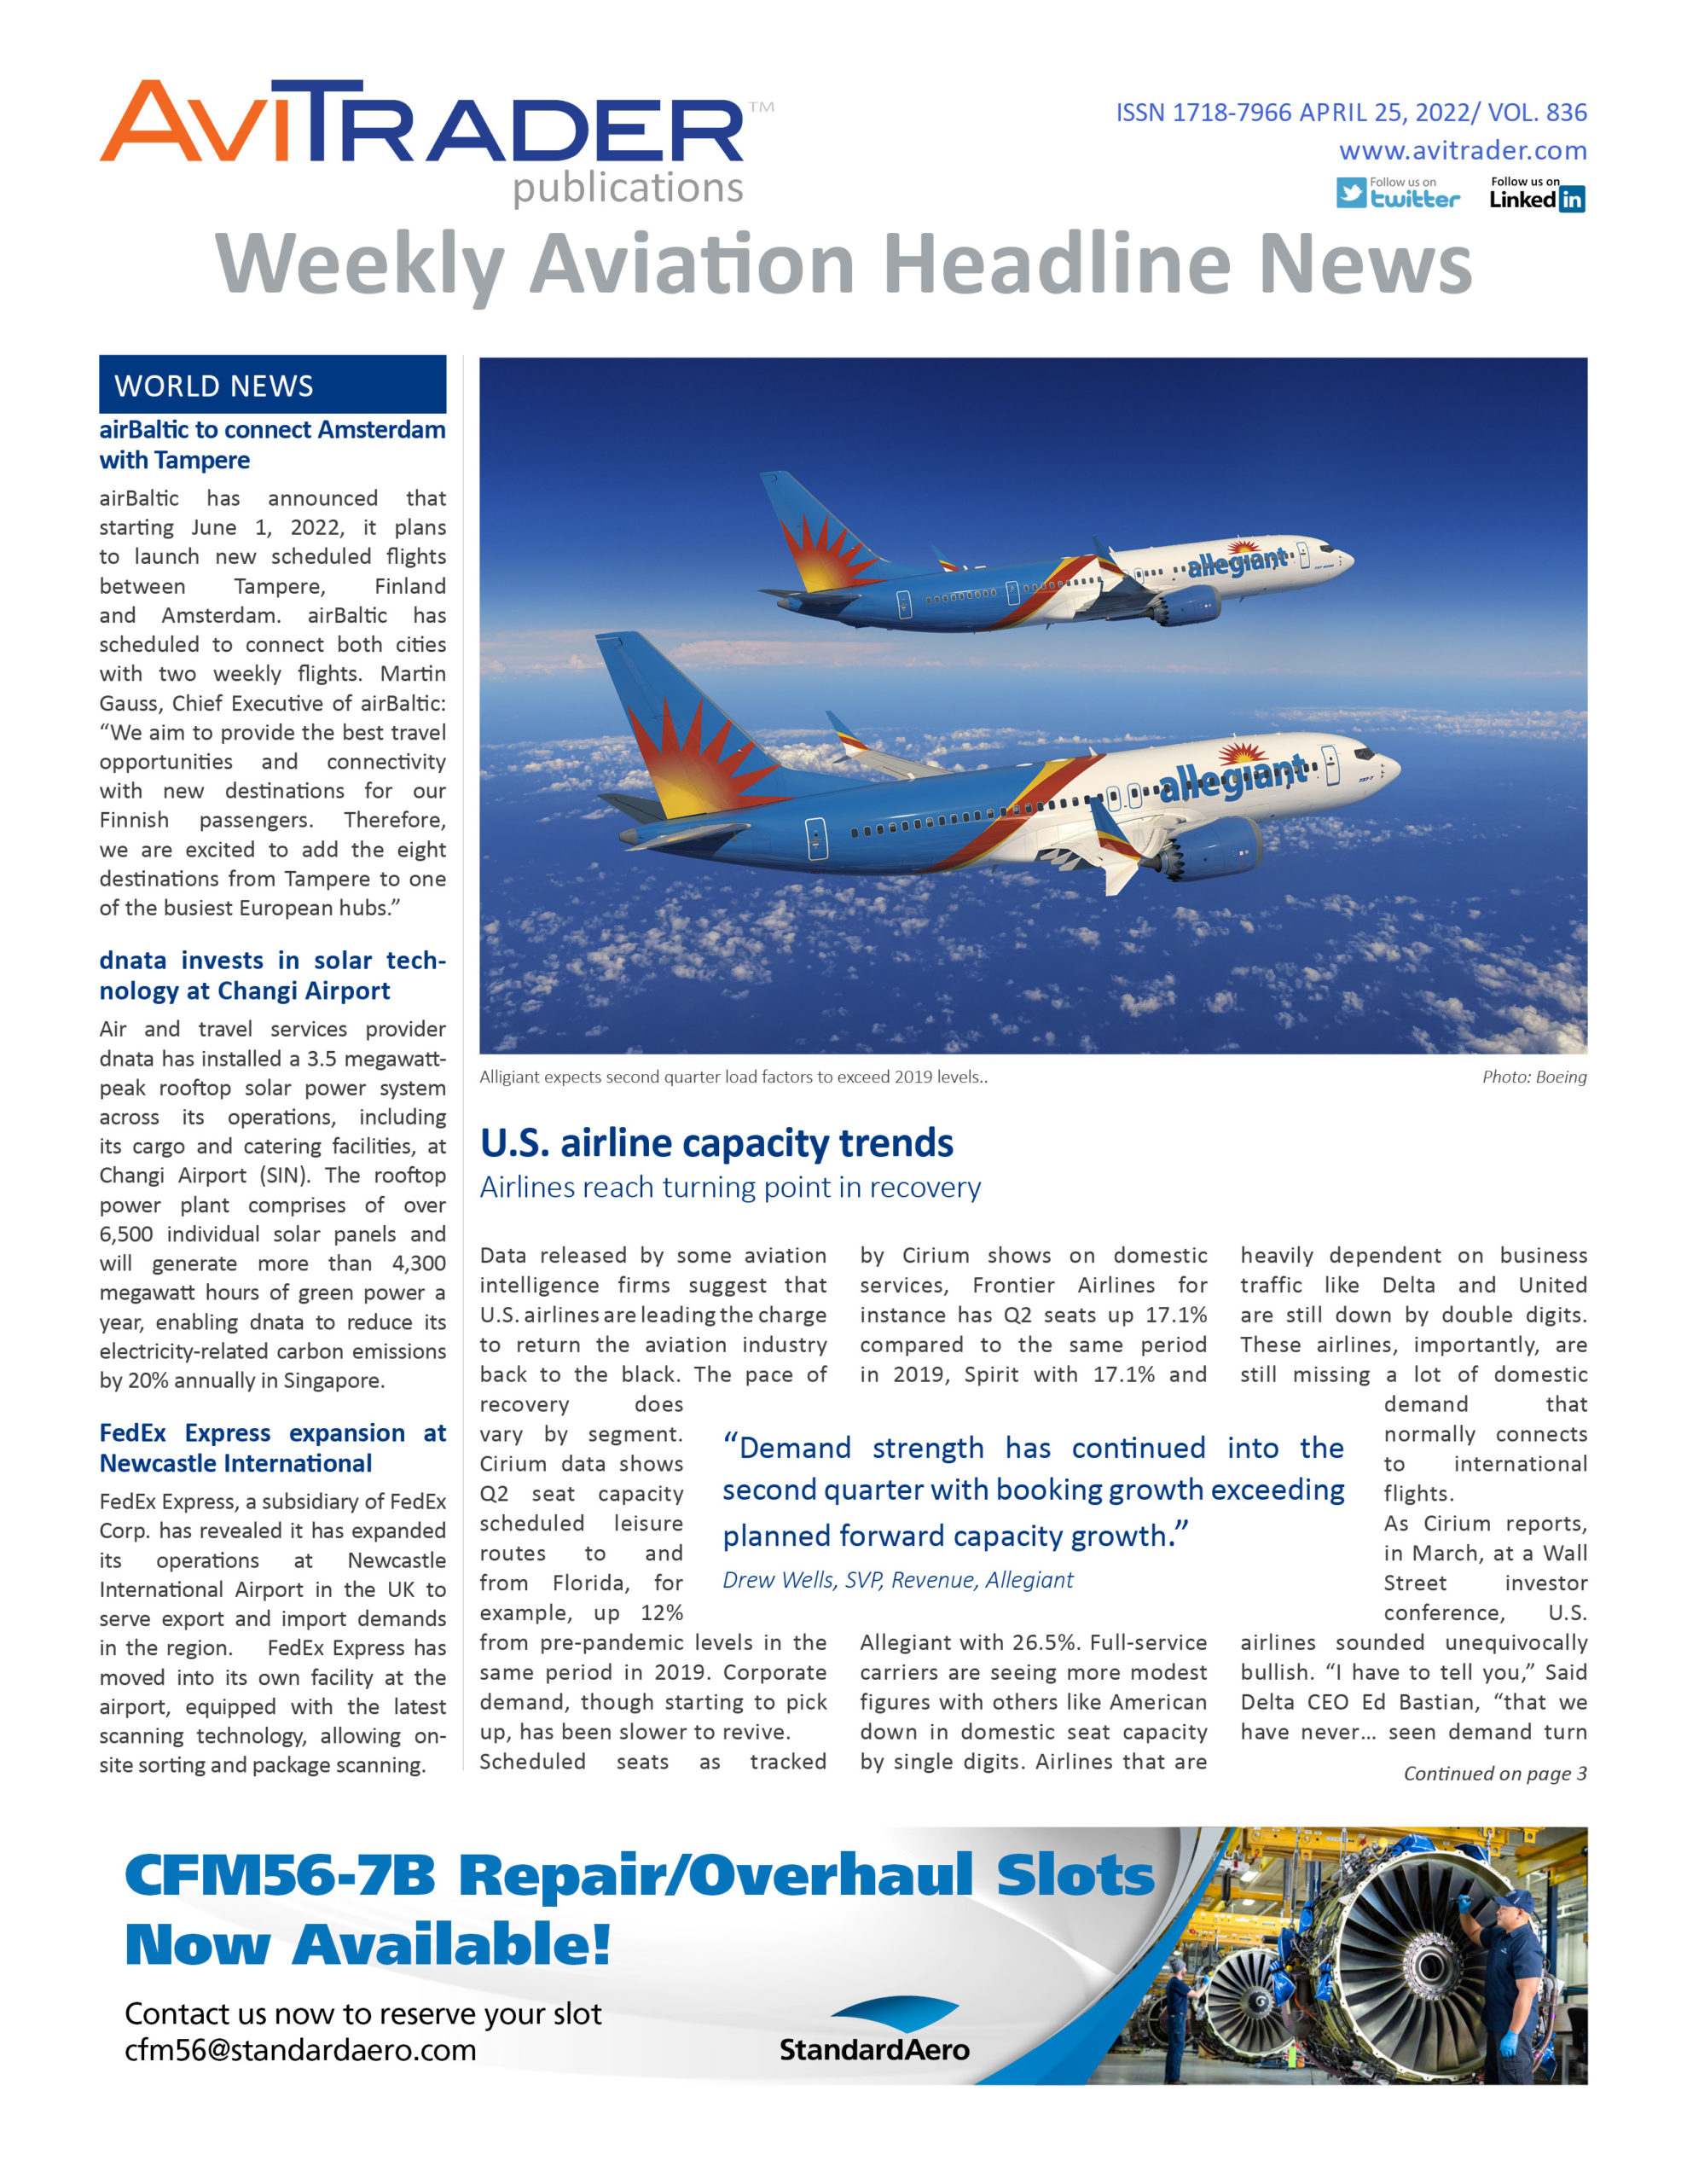 AviTrader_Weekly_Headline_News_Cover_2022-04-25